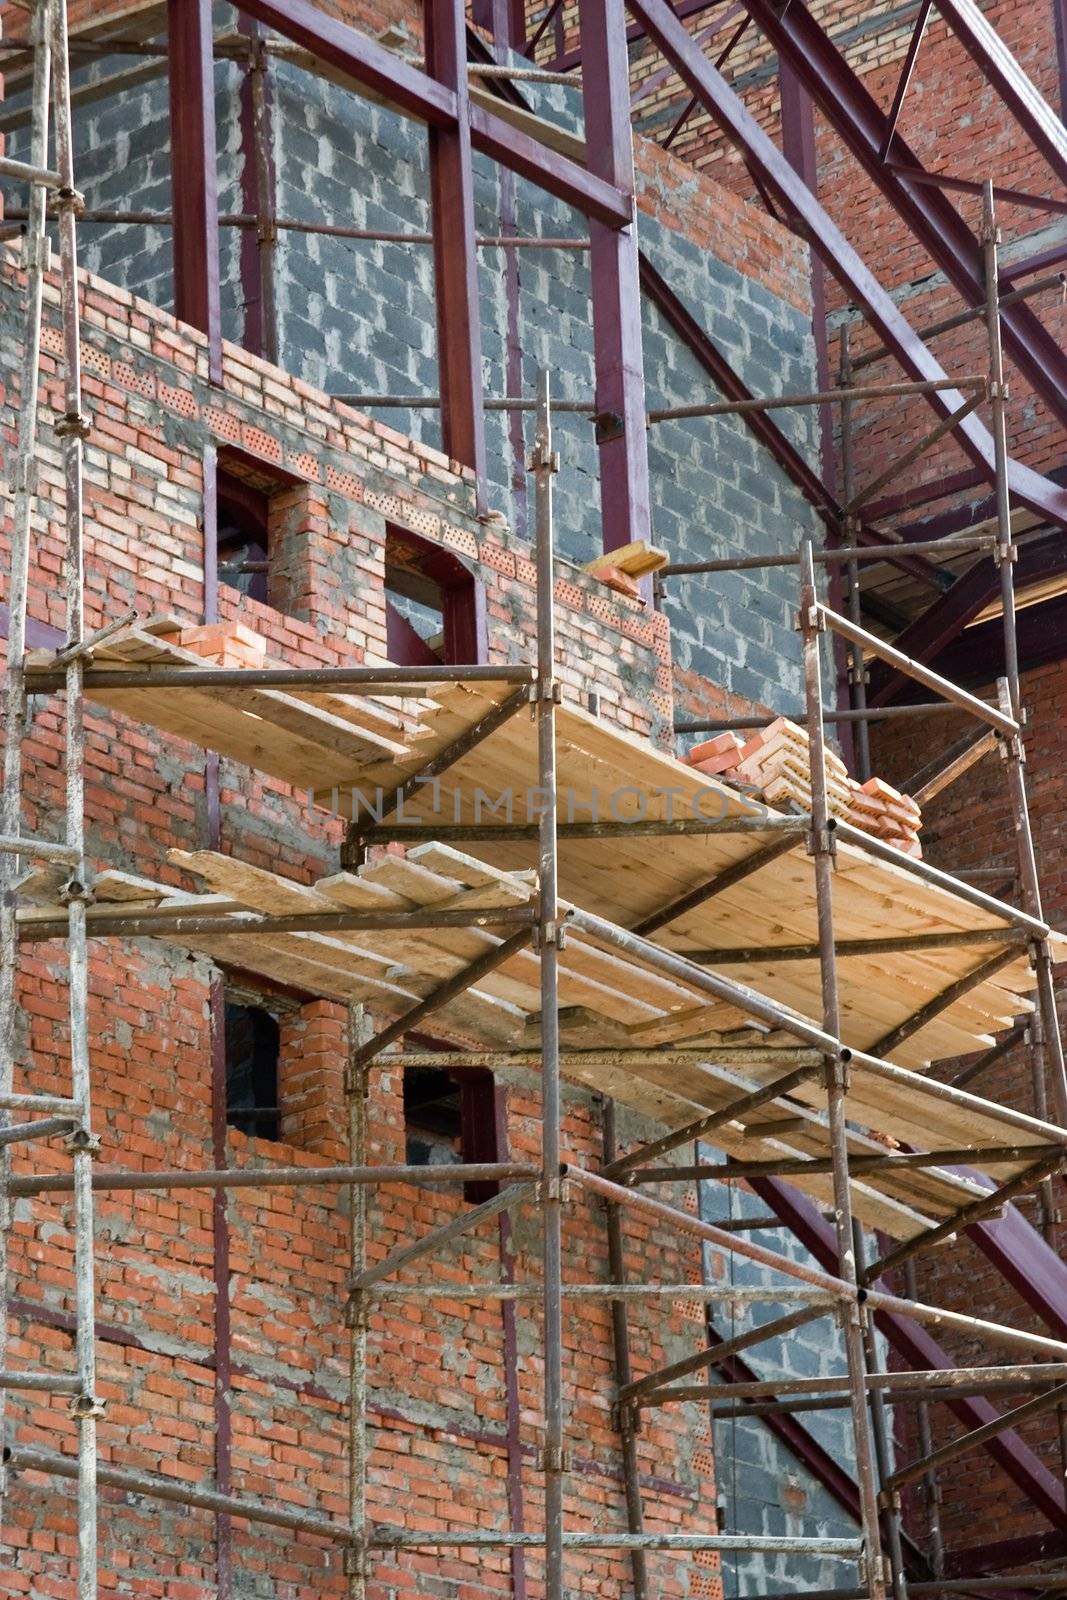 city series: building under construction wiyh scaffolding